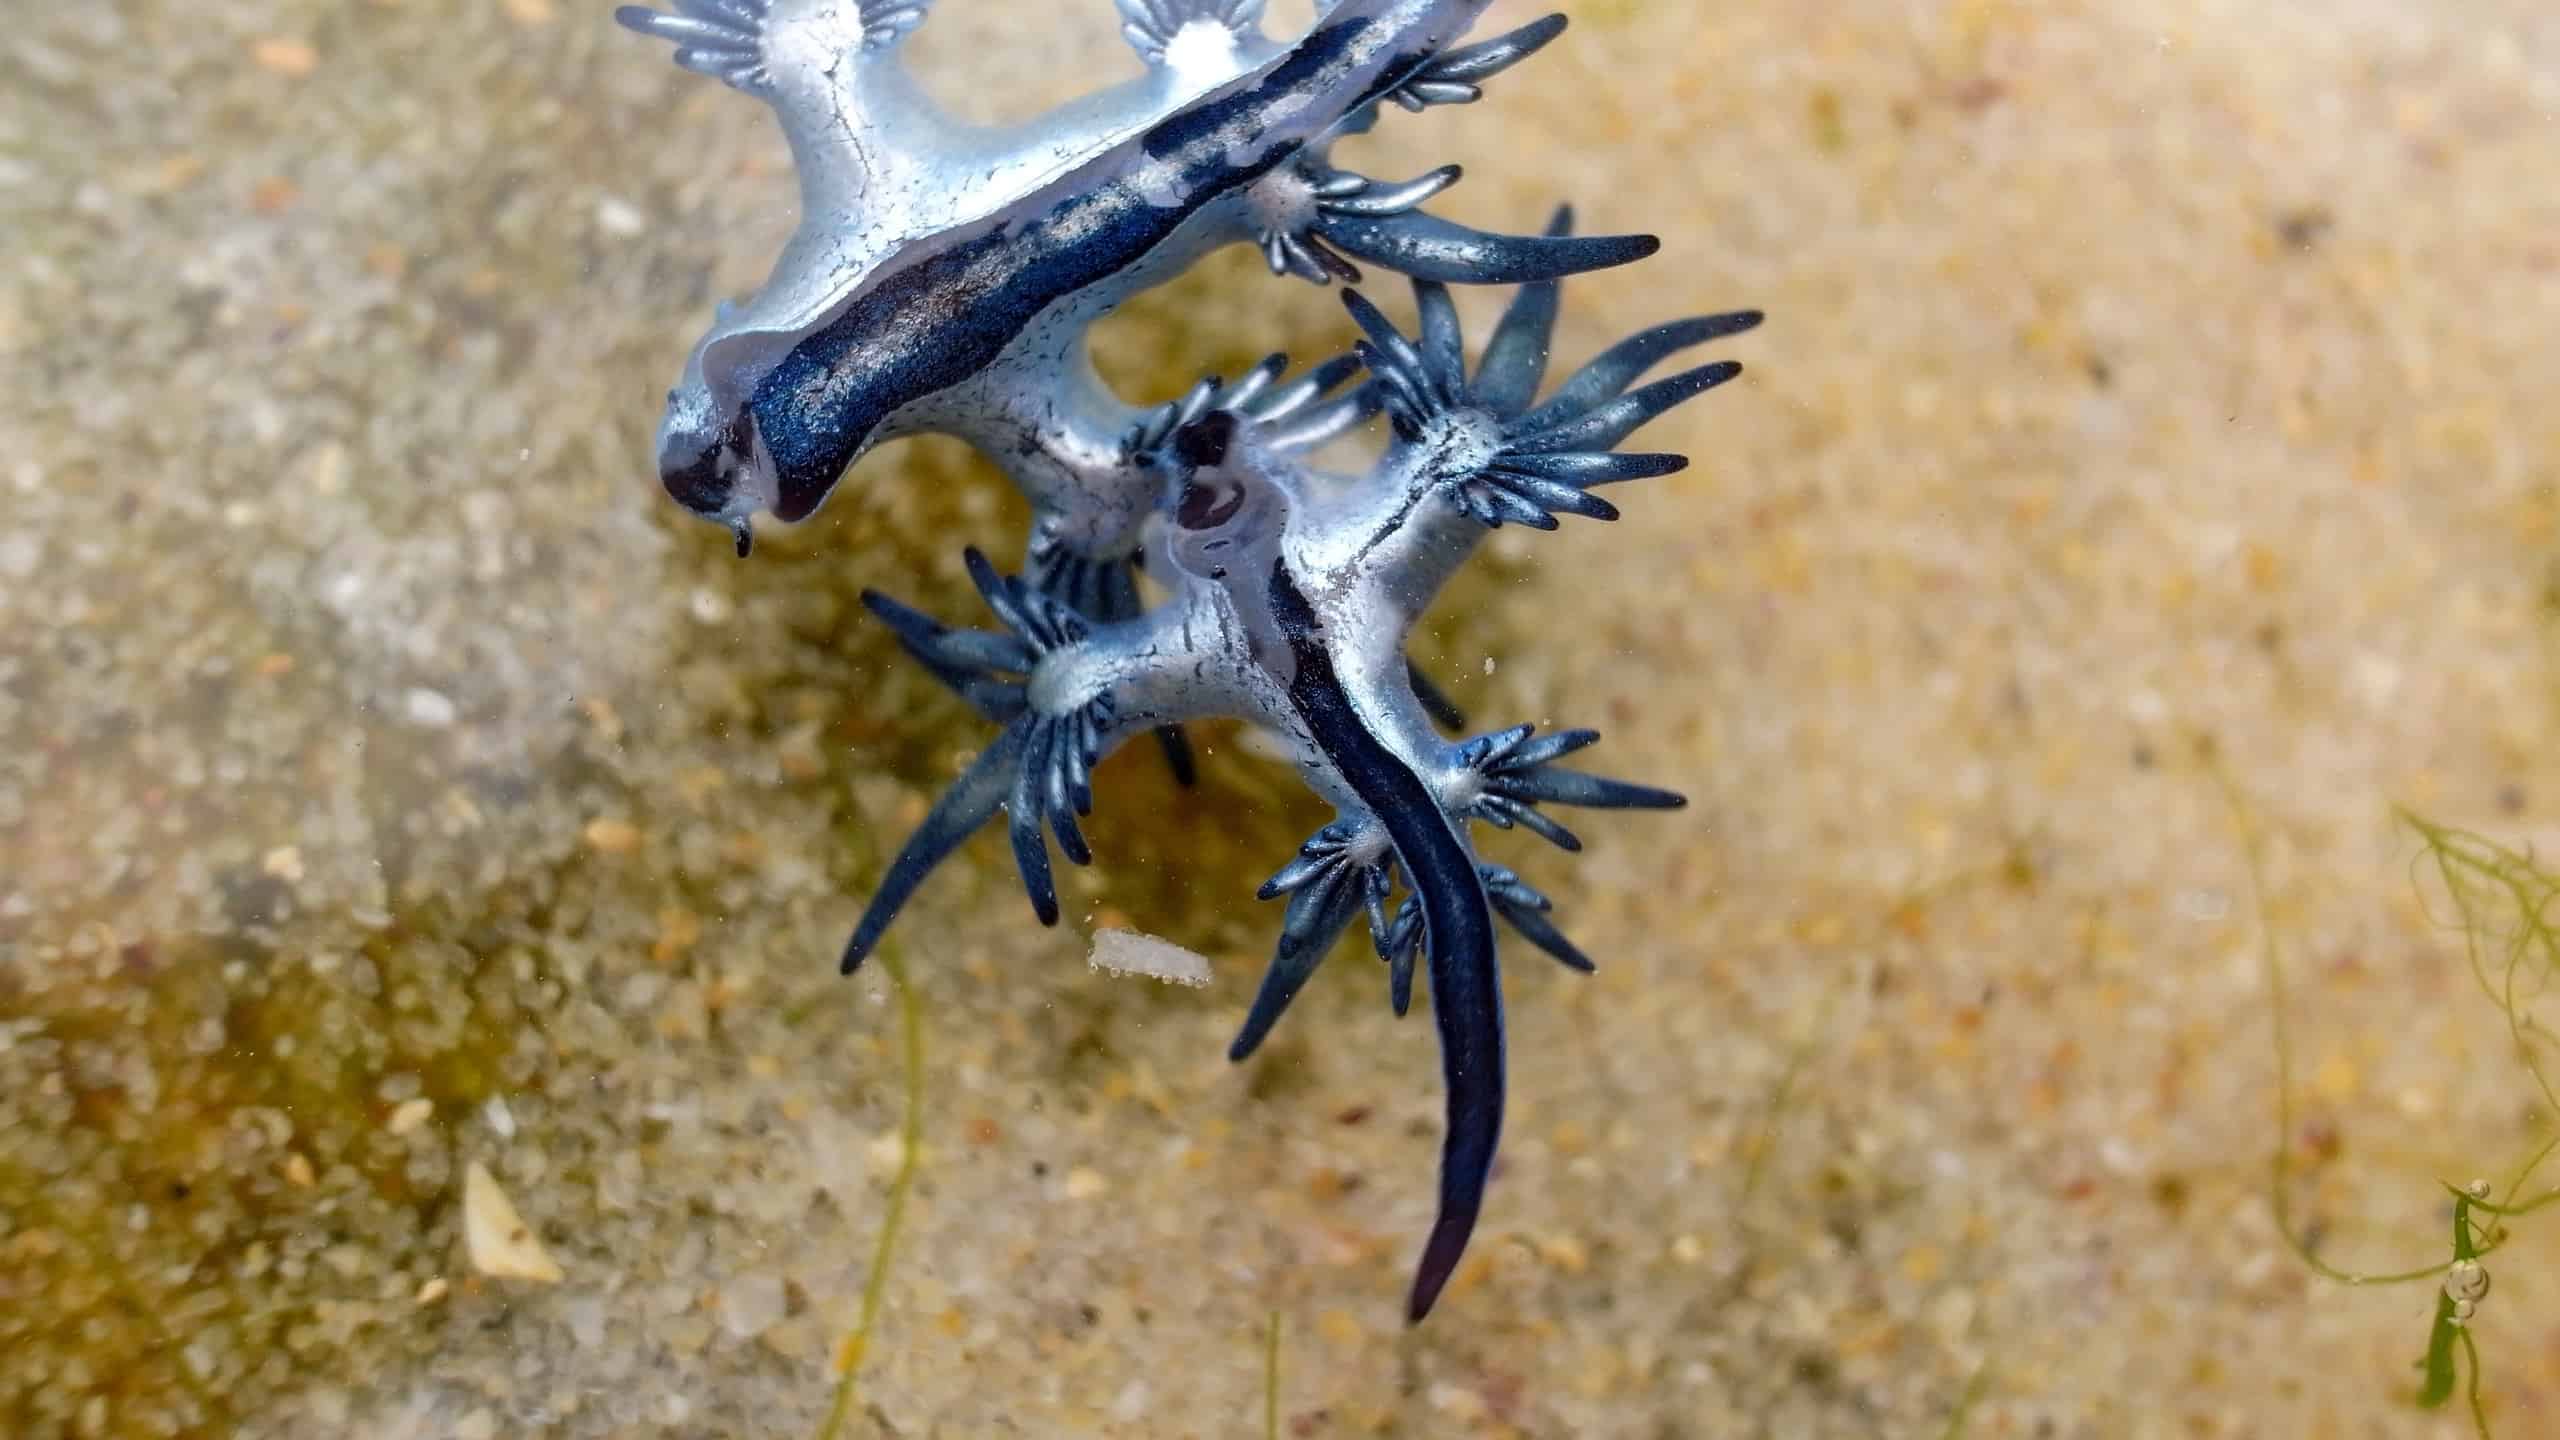 the blue dragon mollusk